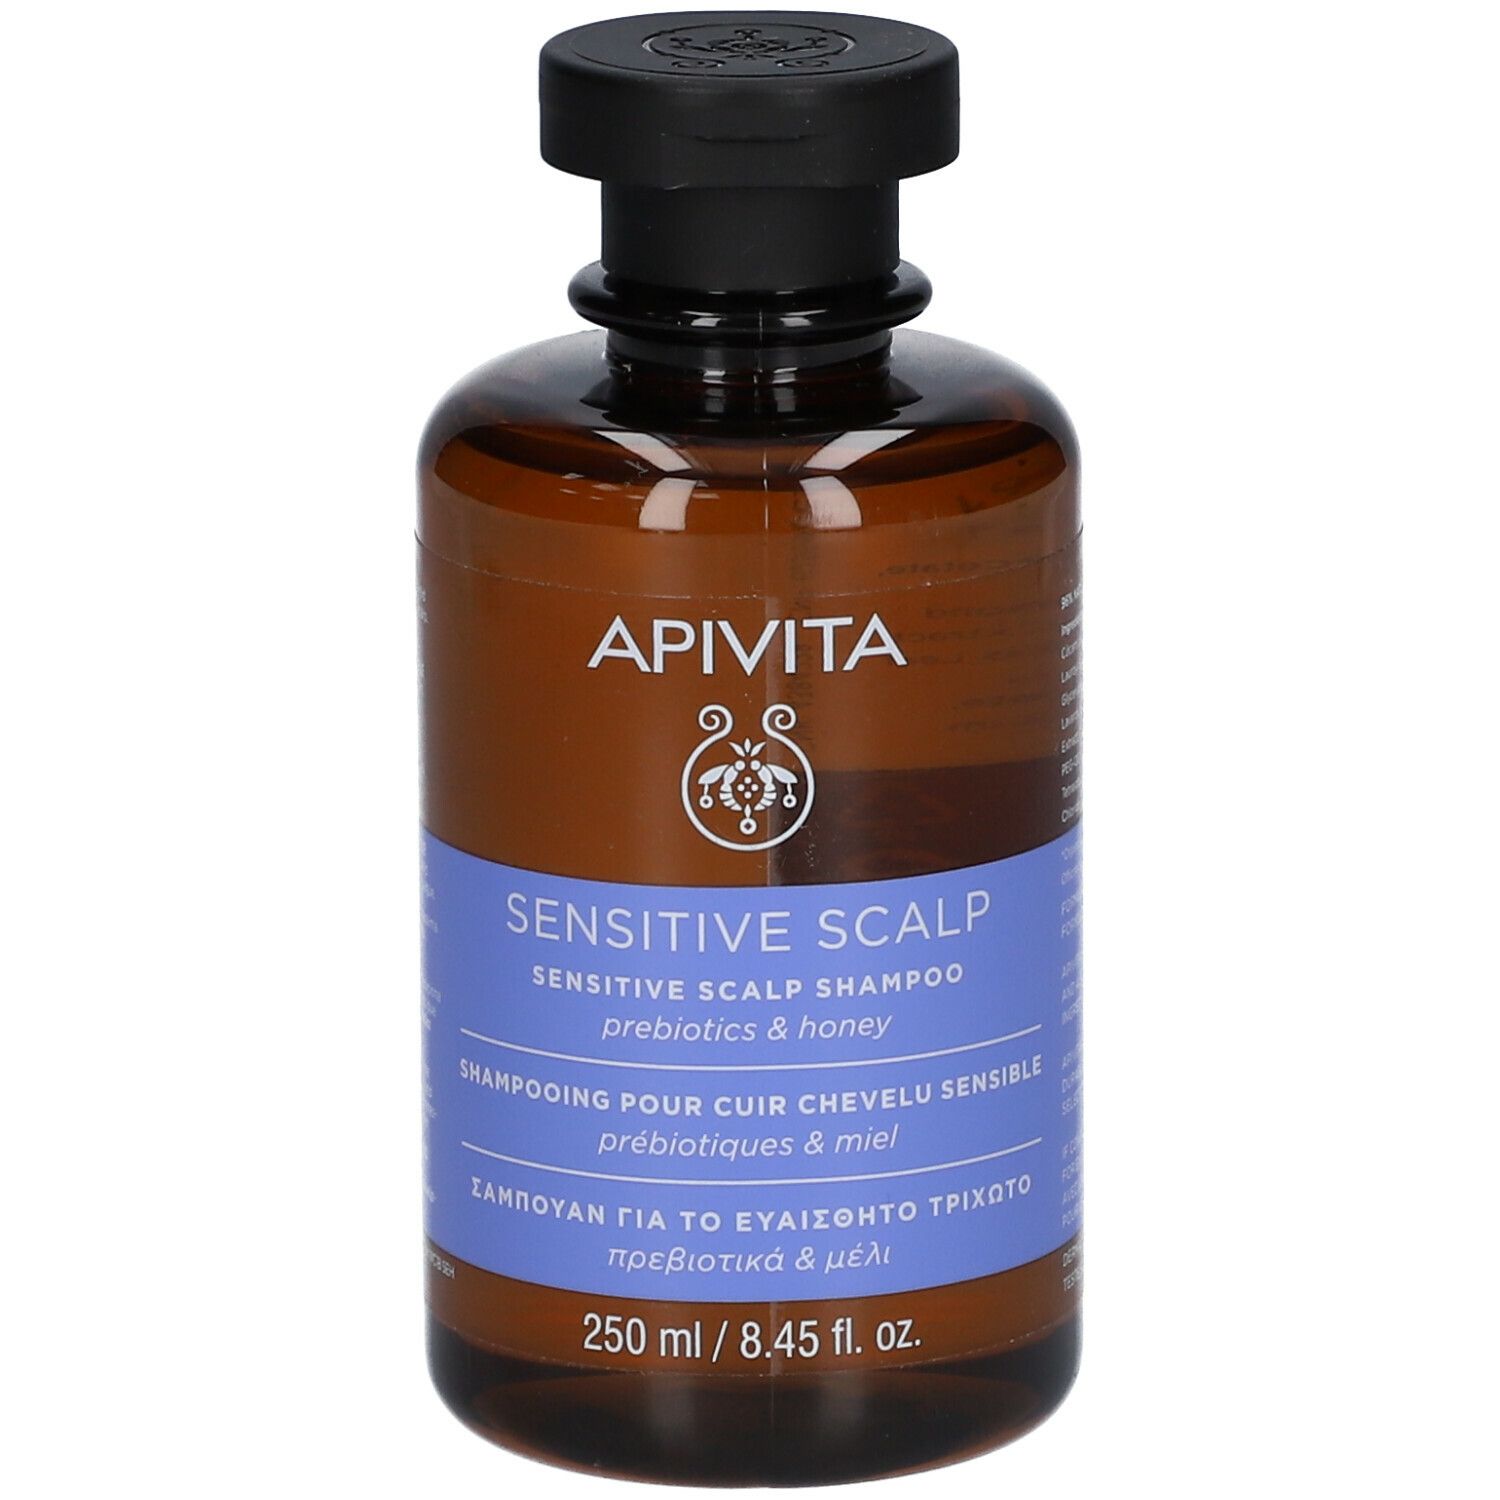 Apivita Sensitive Scalp Shampoing Cuir Chevelu Sensible